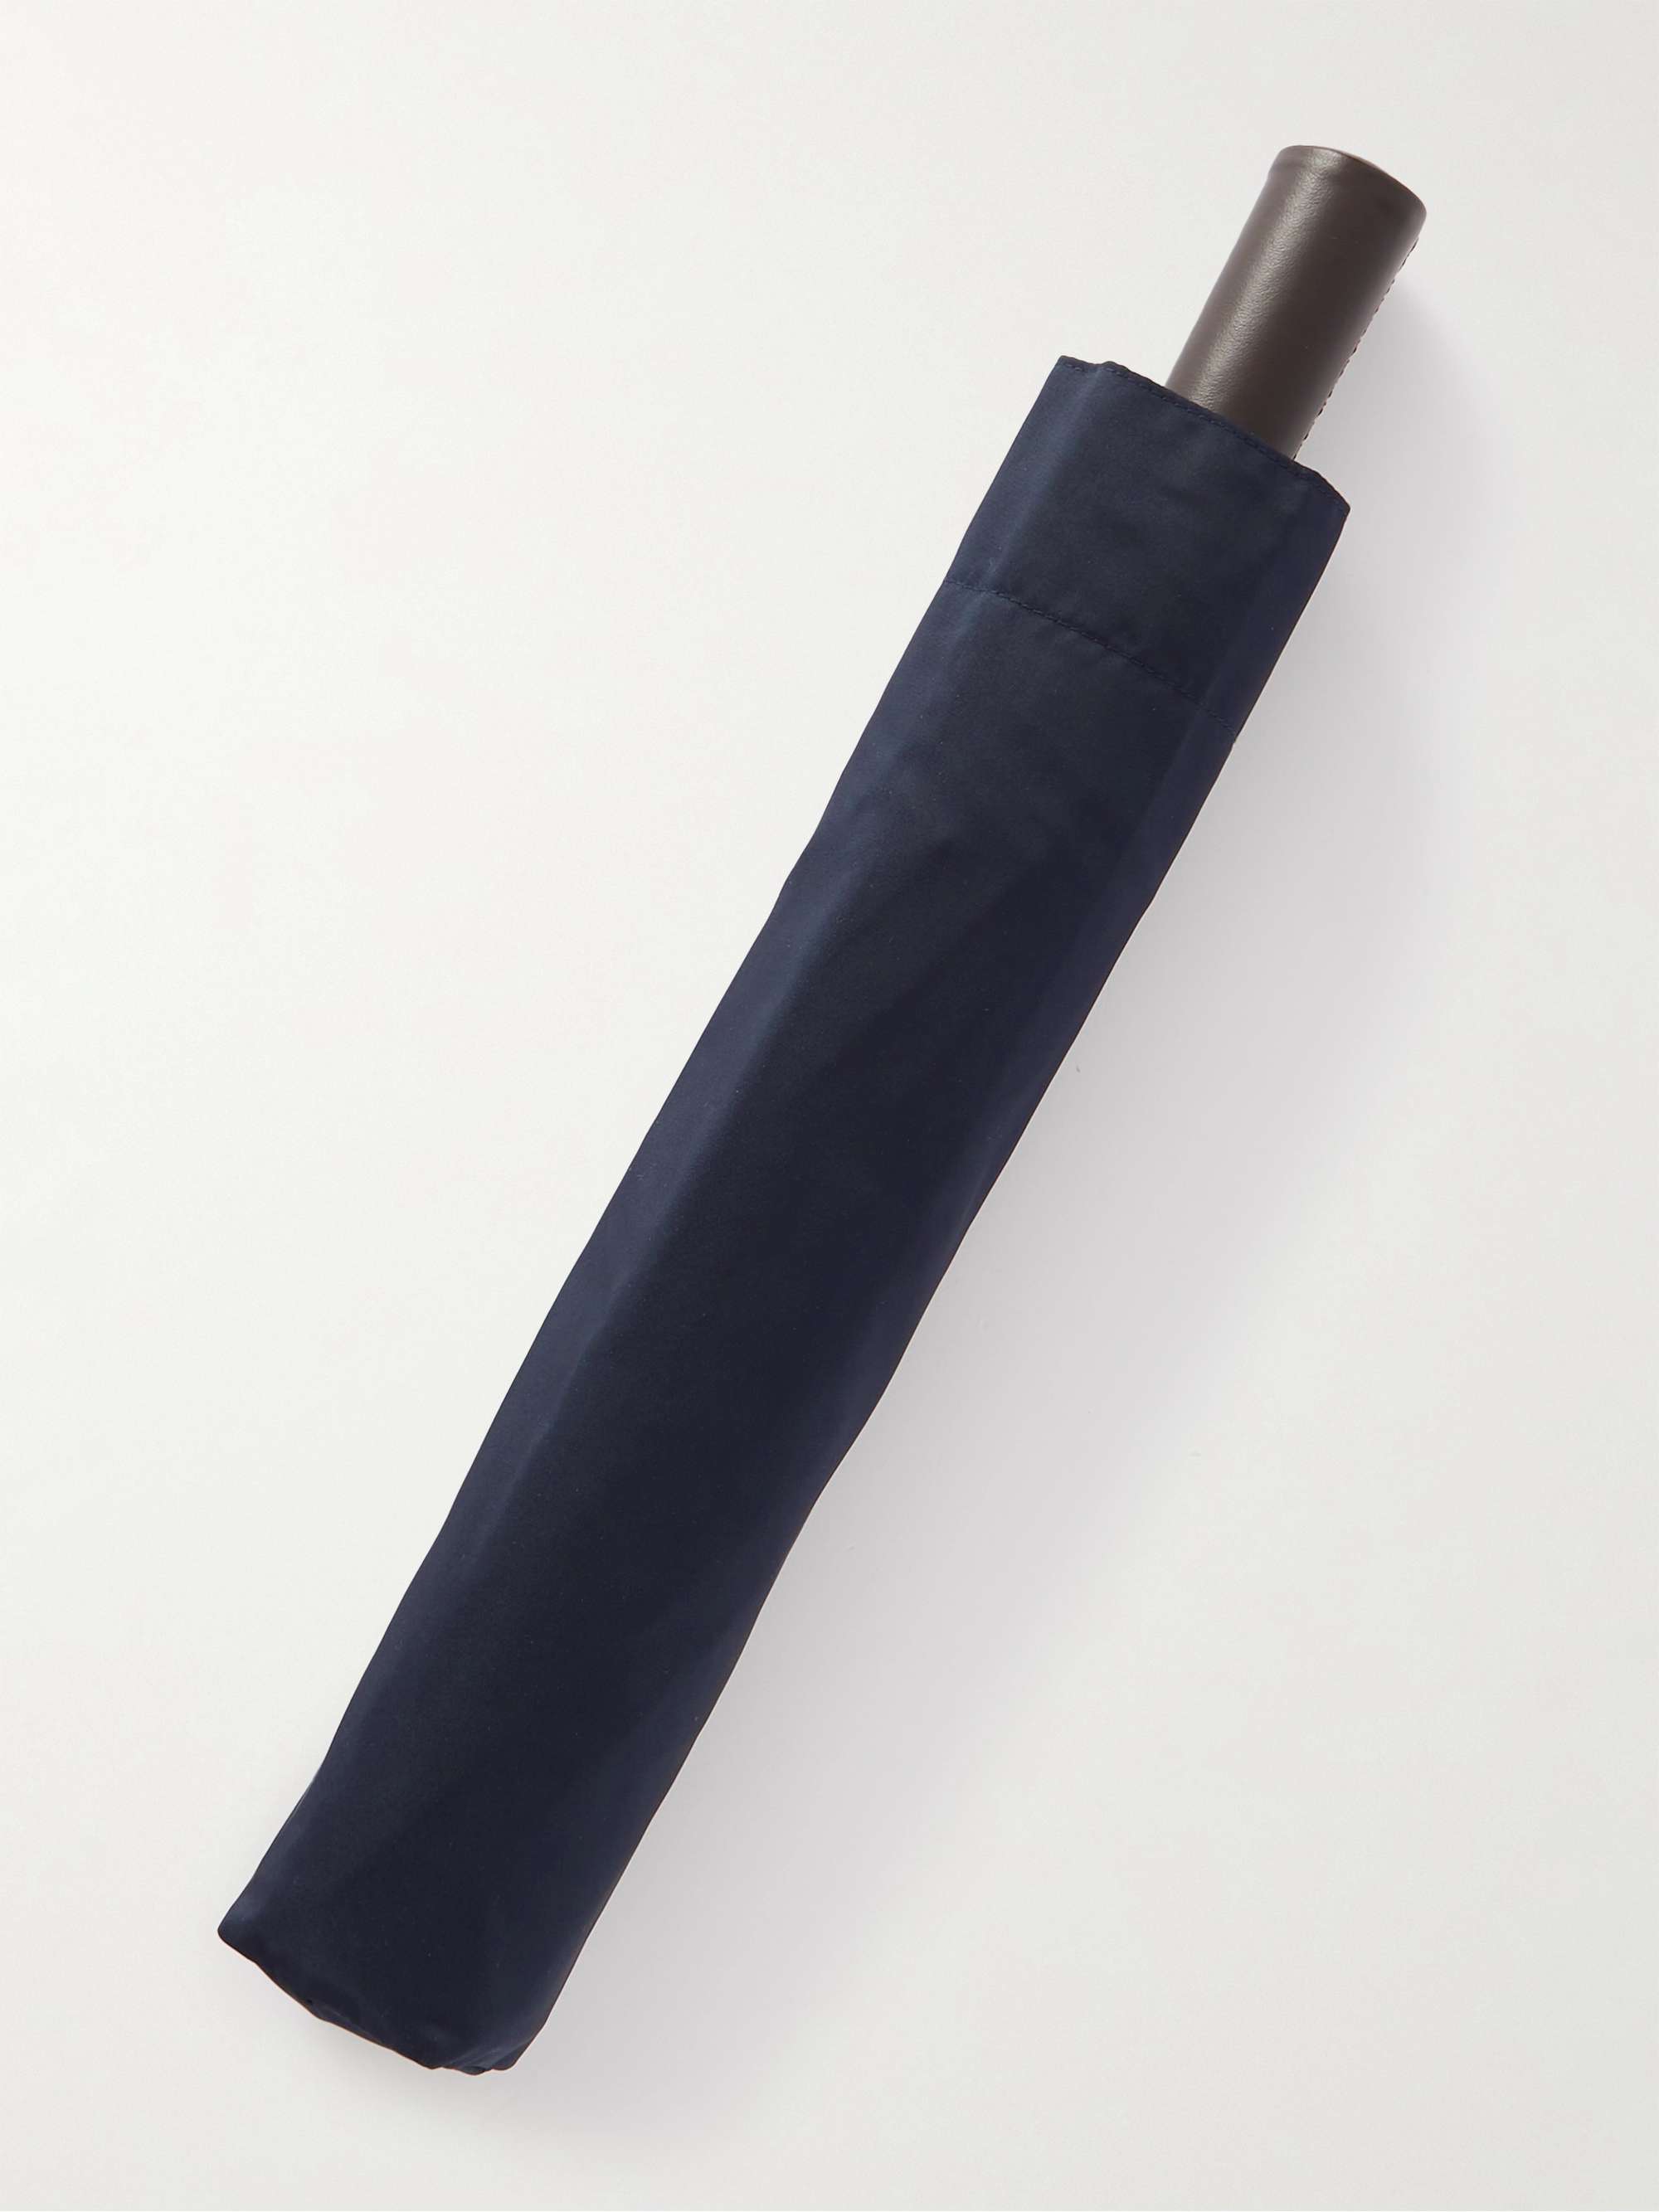 LORO PIANA Leather-Handle Umbrella